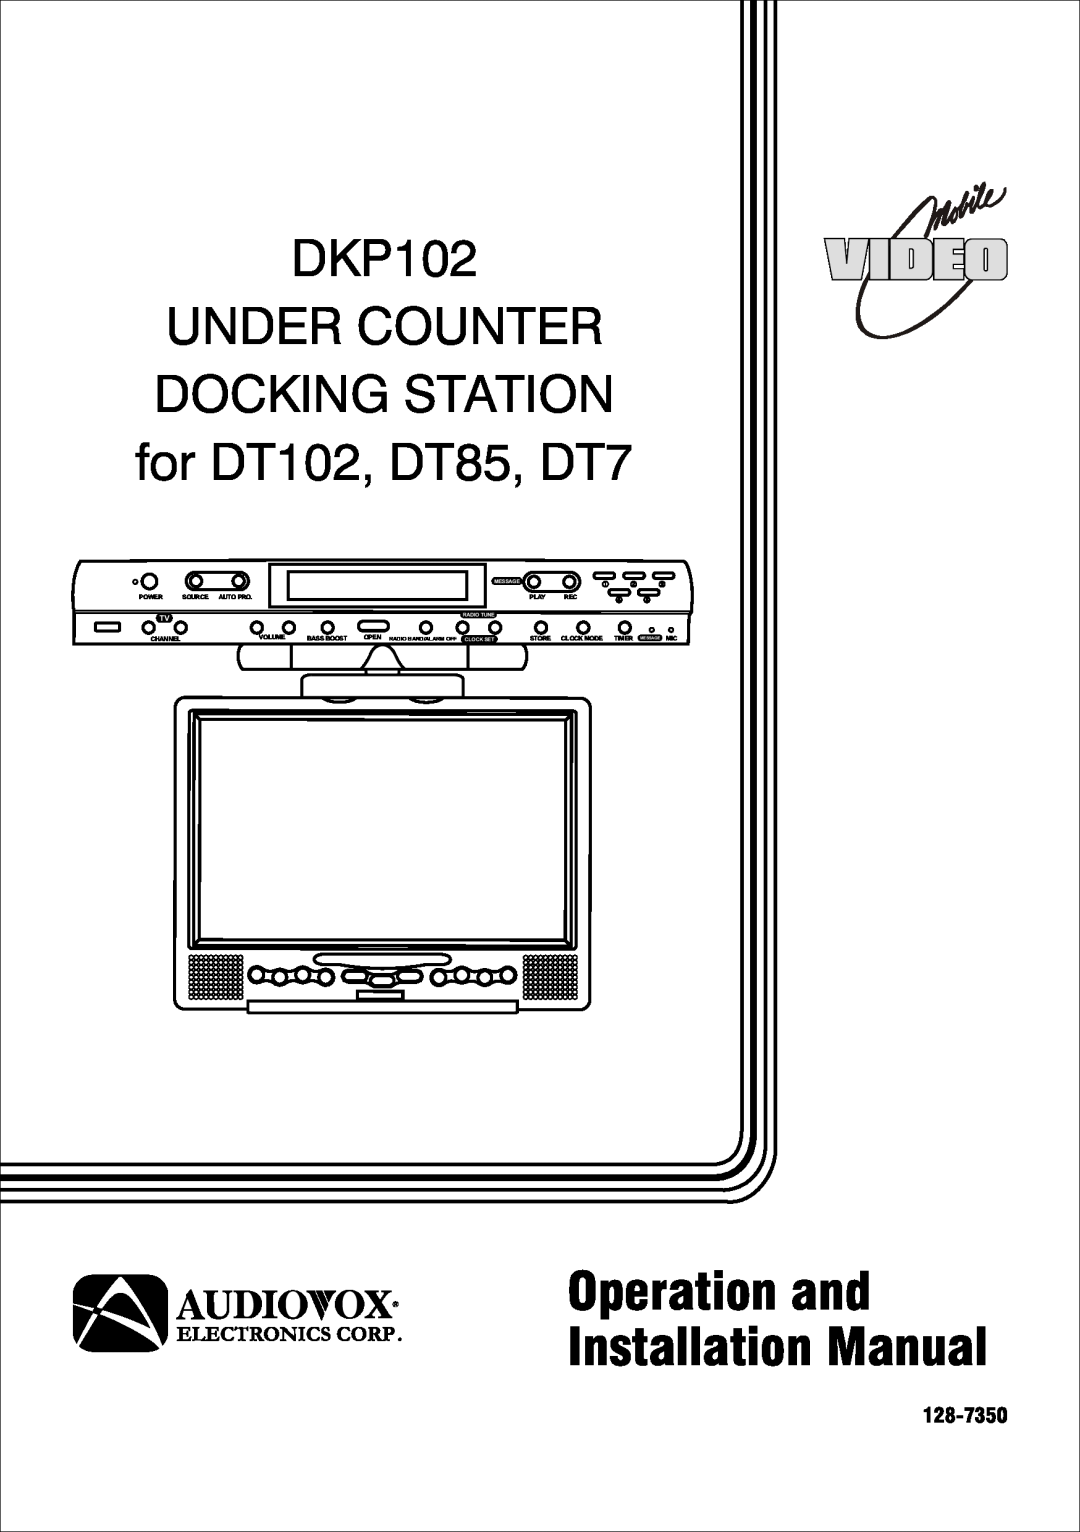 Audiovox installation manual DKP102 UNDER COUNTER DOCKING STATION, for DT102, DT85, DT7, Message, Radio Tune 